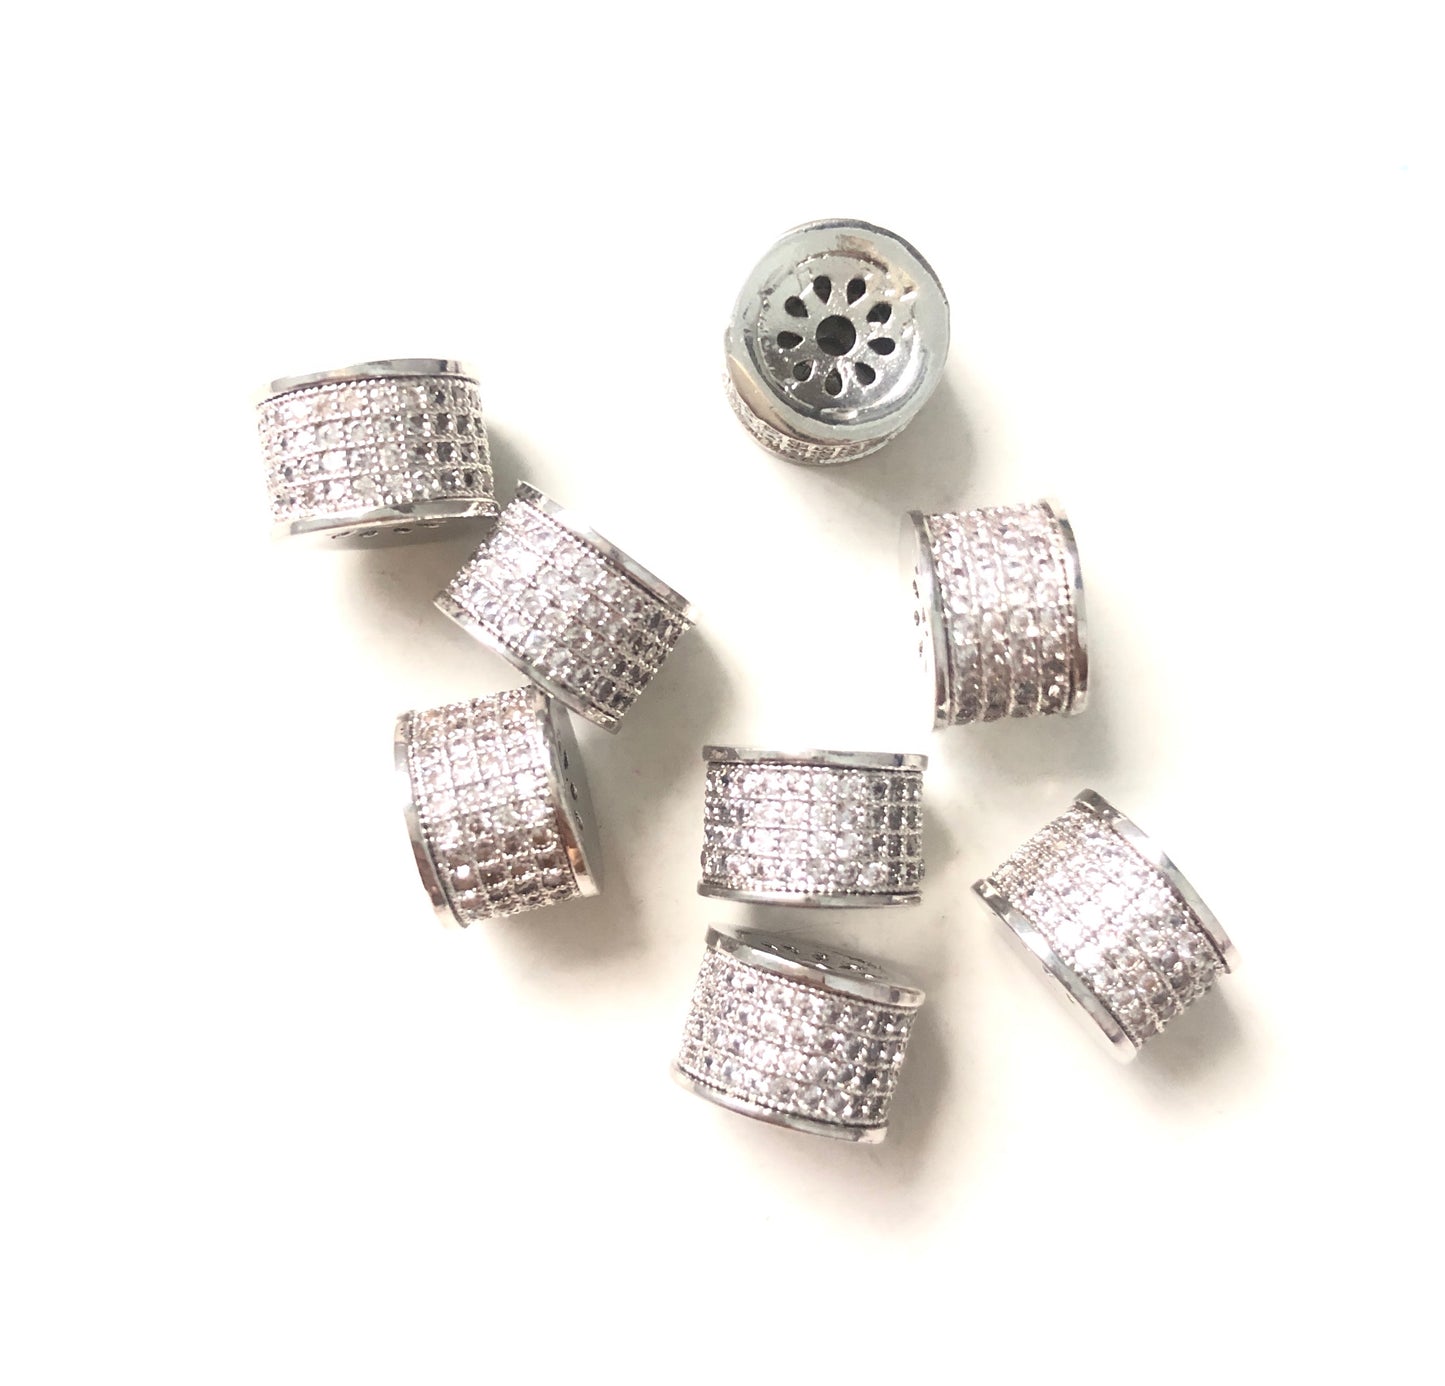 10pcs/lot 9.5*6.5mm CZ Paved Cylinder Rondelle Spacers Silver CZ Paved Spacers Rondelle Beads Charms Beads Beyond